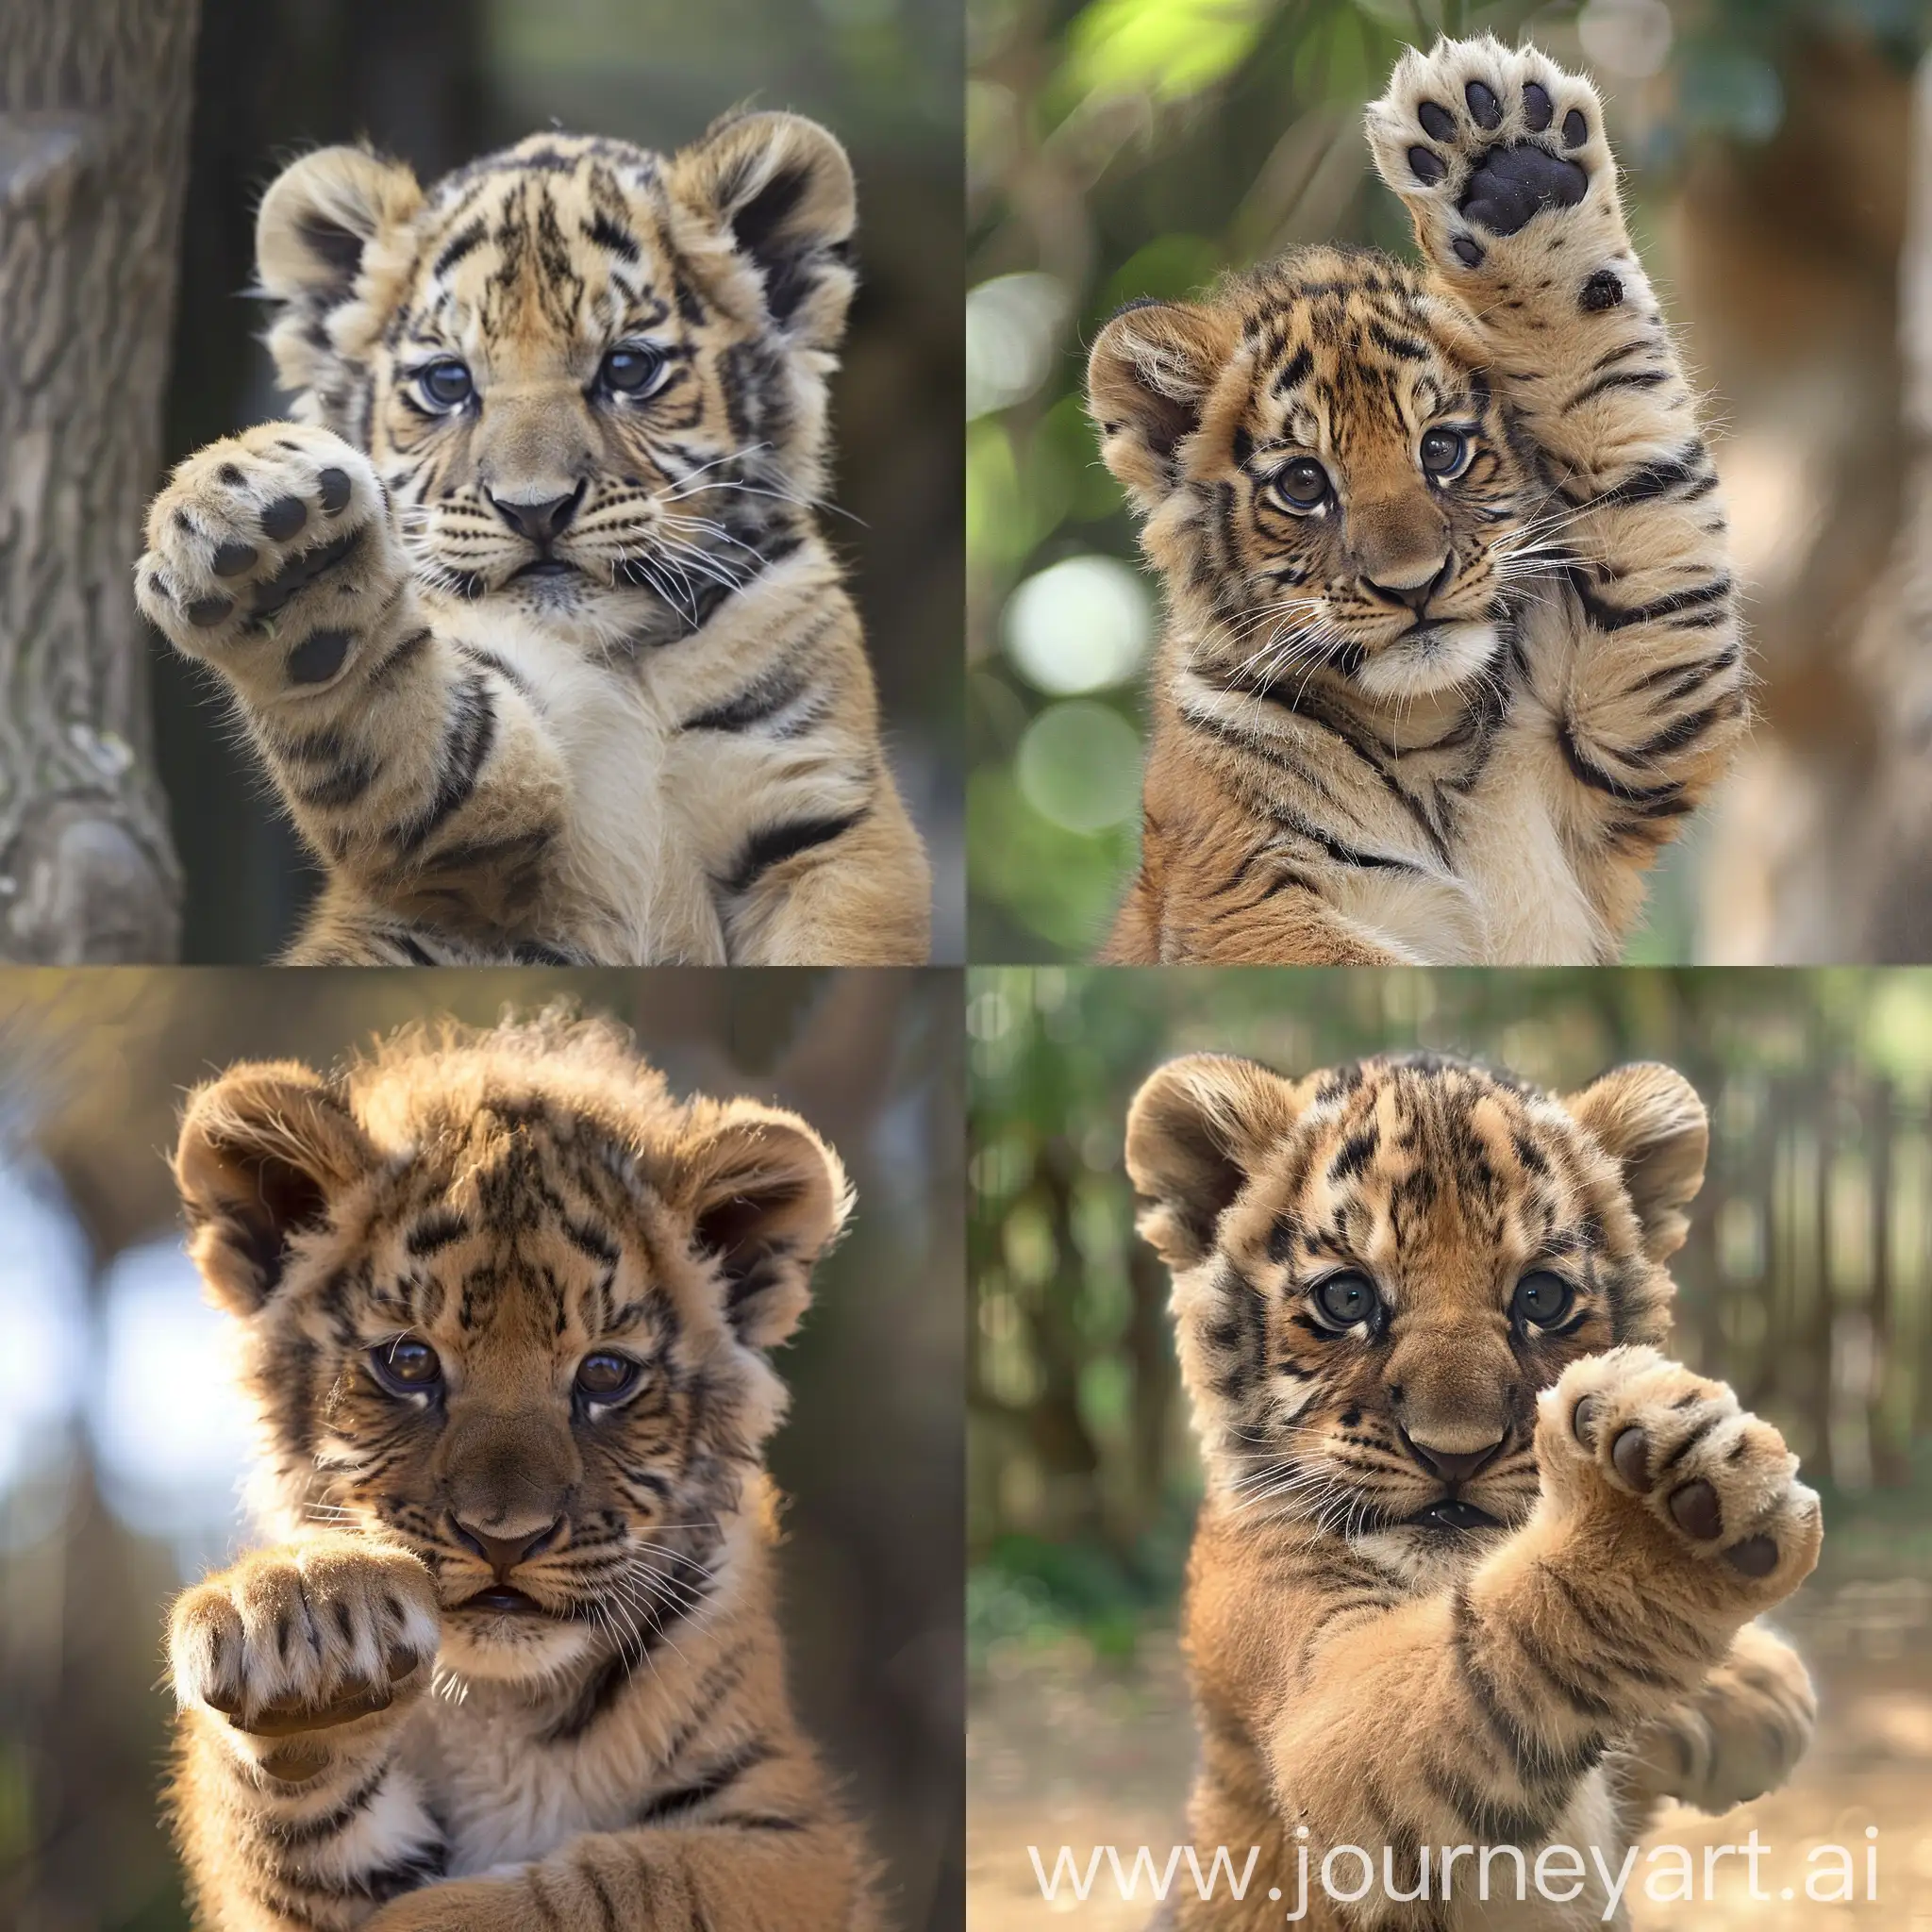 Playful-Tiger-Cubs-Paw-Gesture